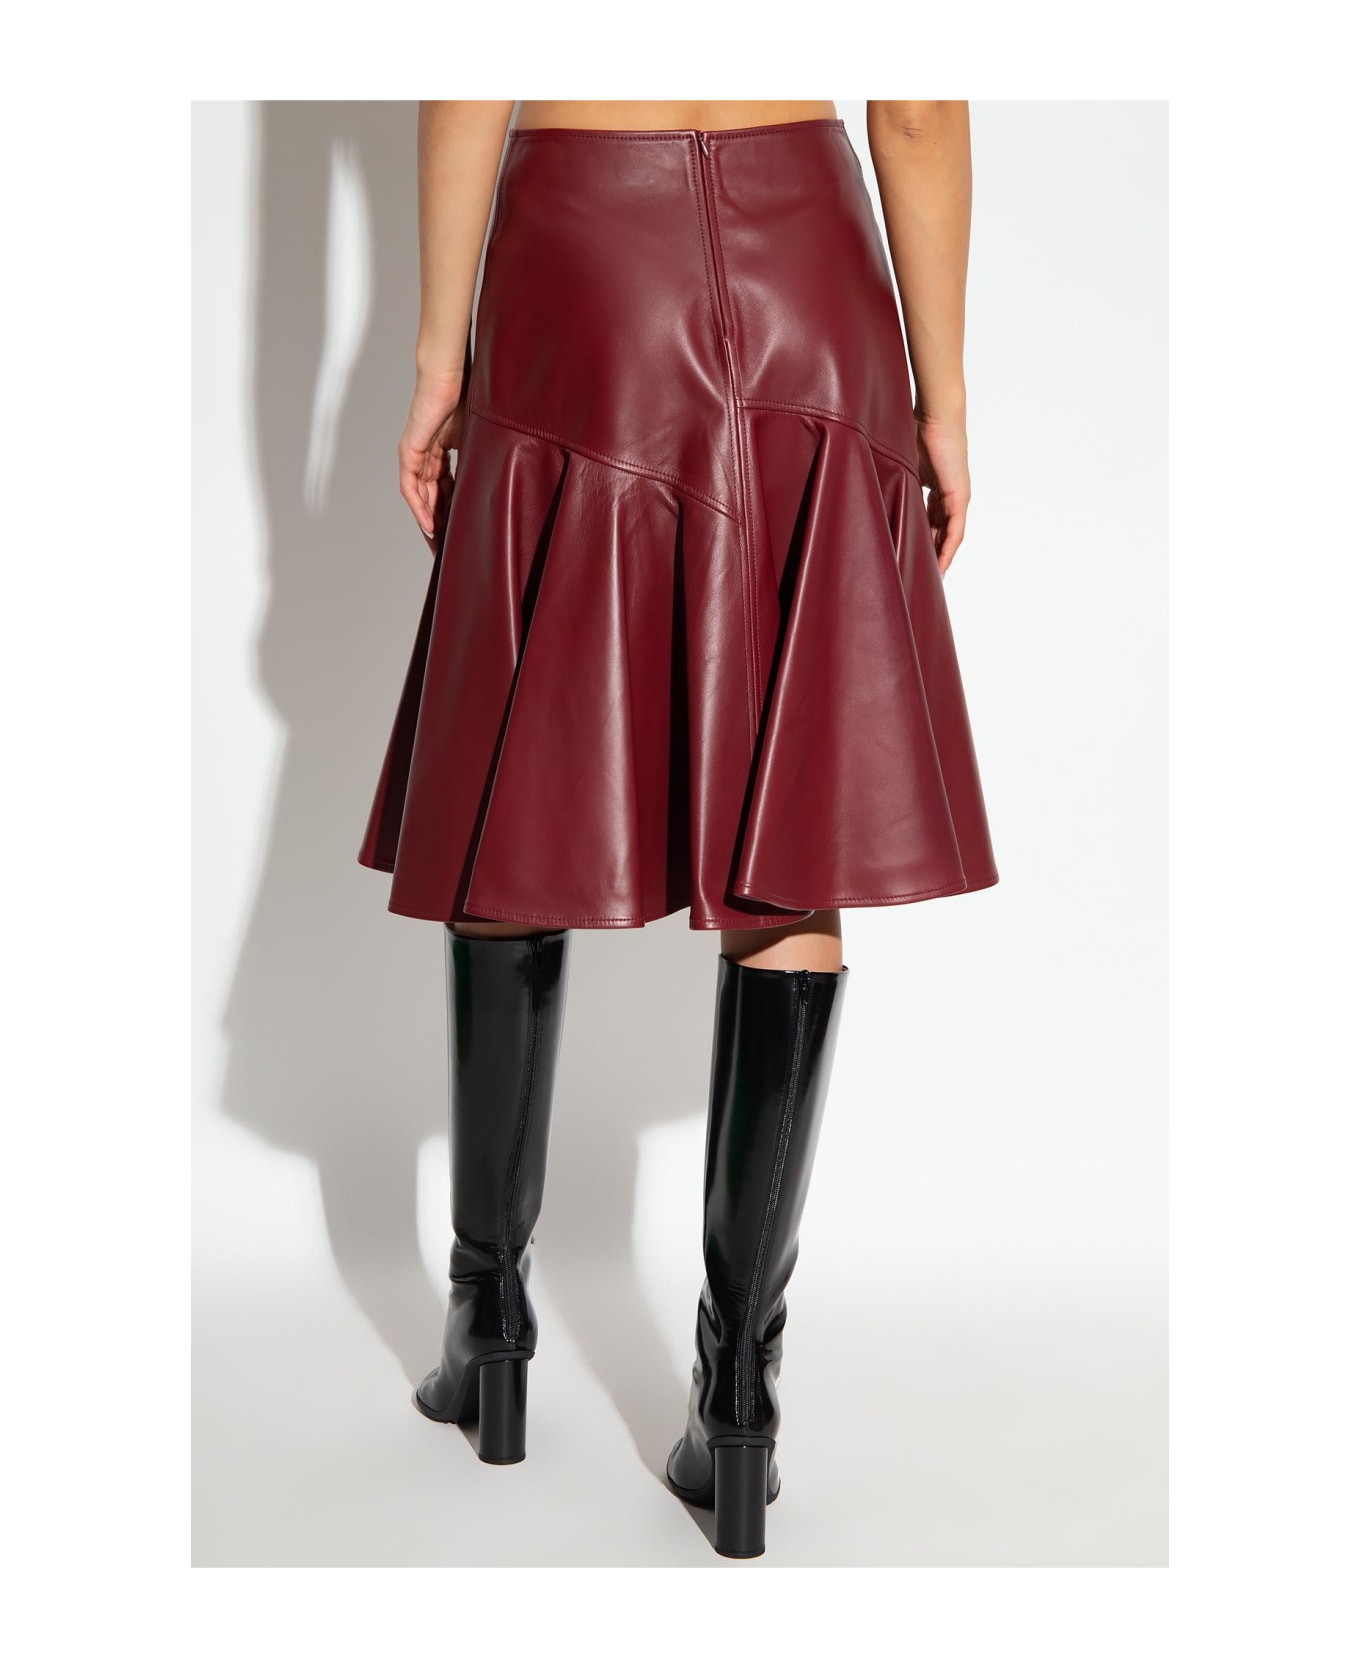 Bottega Veneta Leather Skirt - Bordeaux